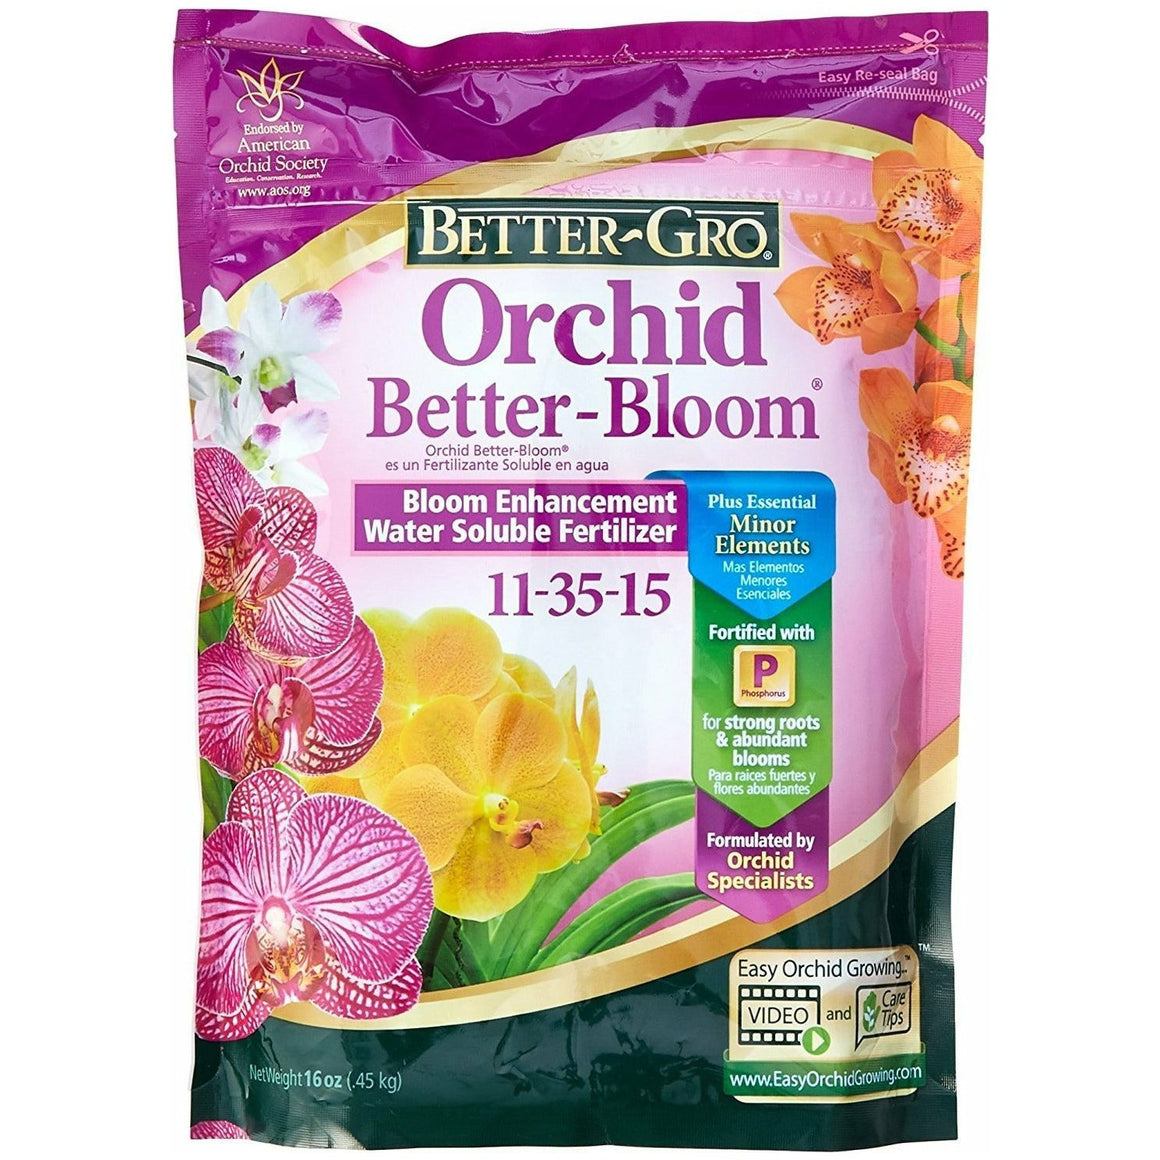 Better-Gro Orchid Better-Bloom Fertilizer 11-35-15 - 1 lb. - Seed World